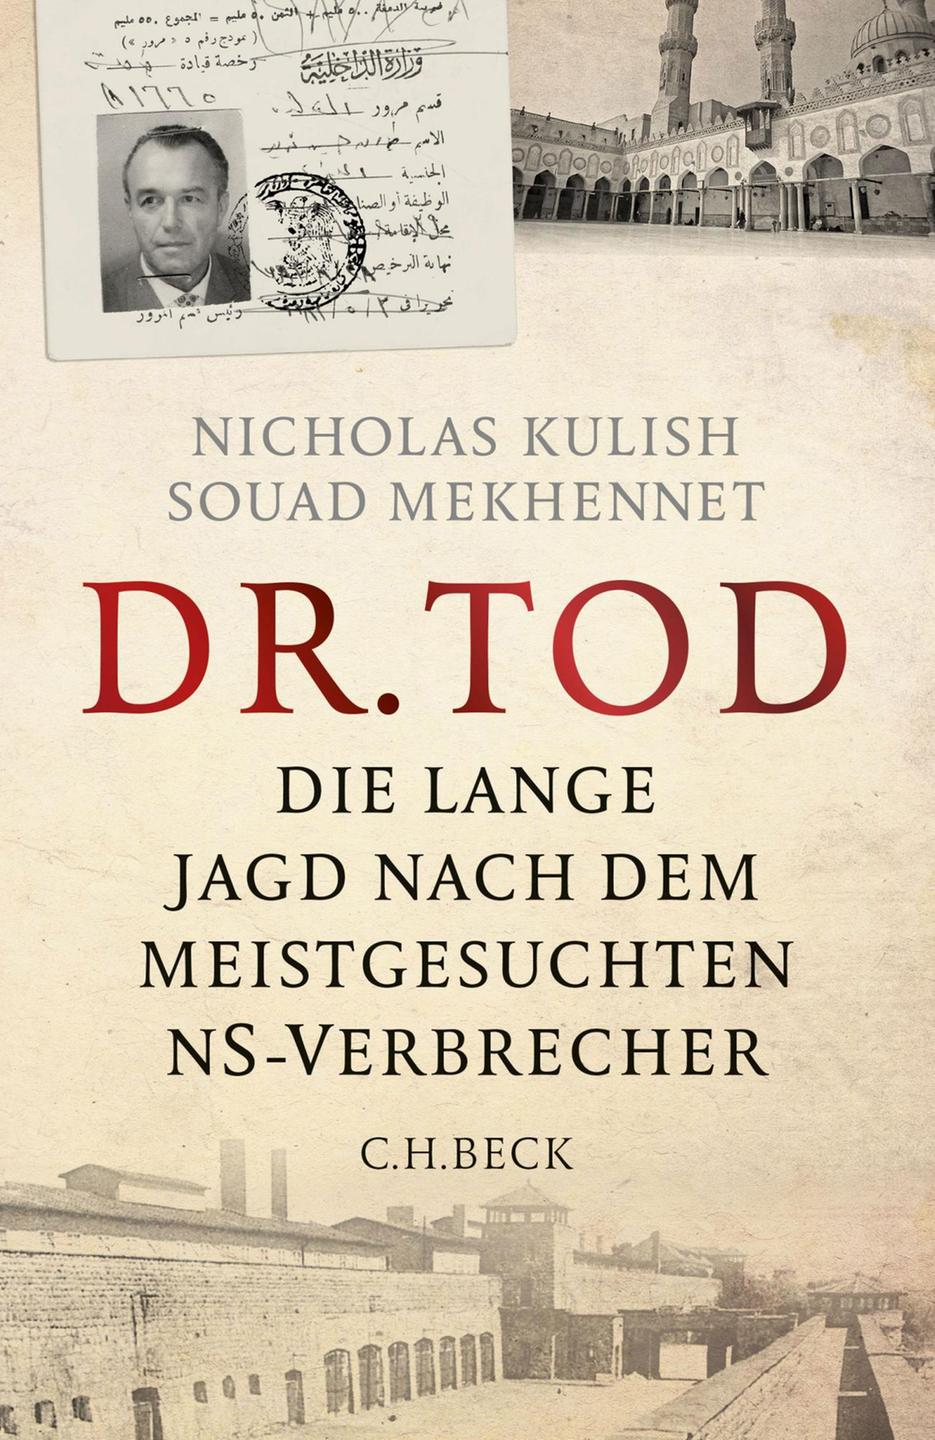 "Dr. Tod"